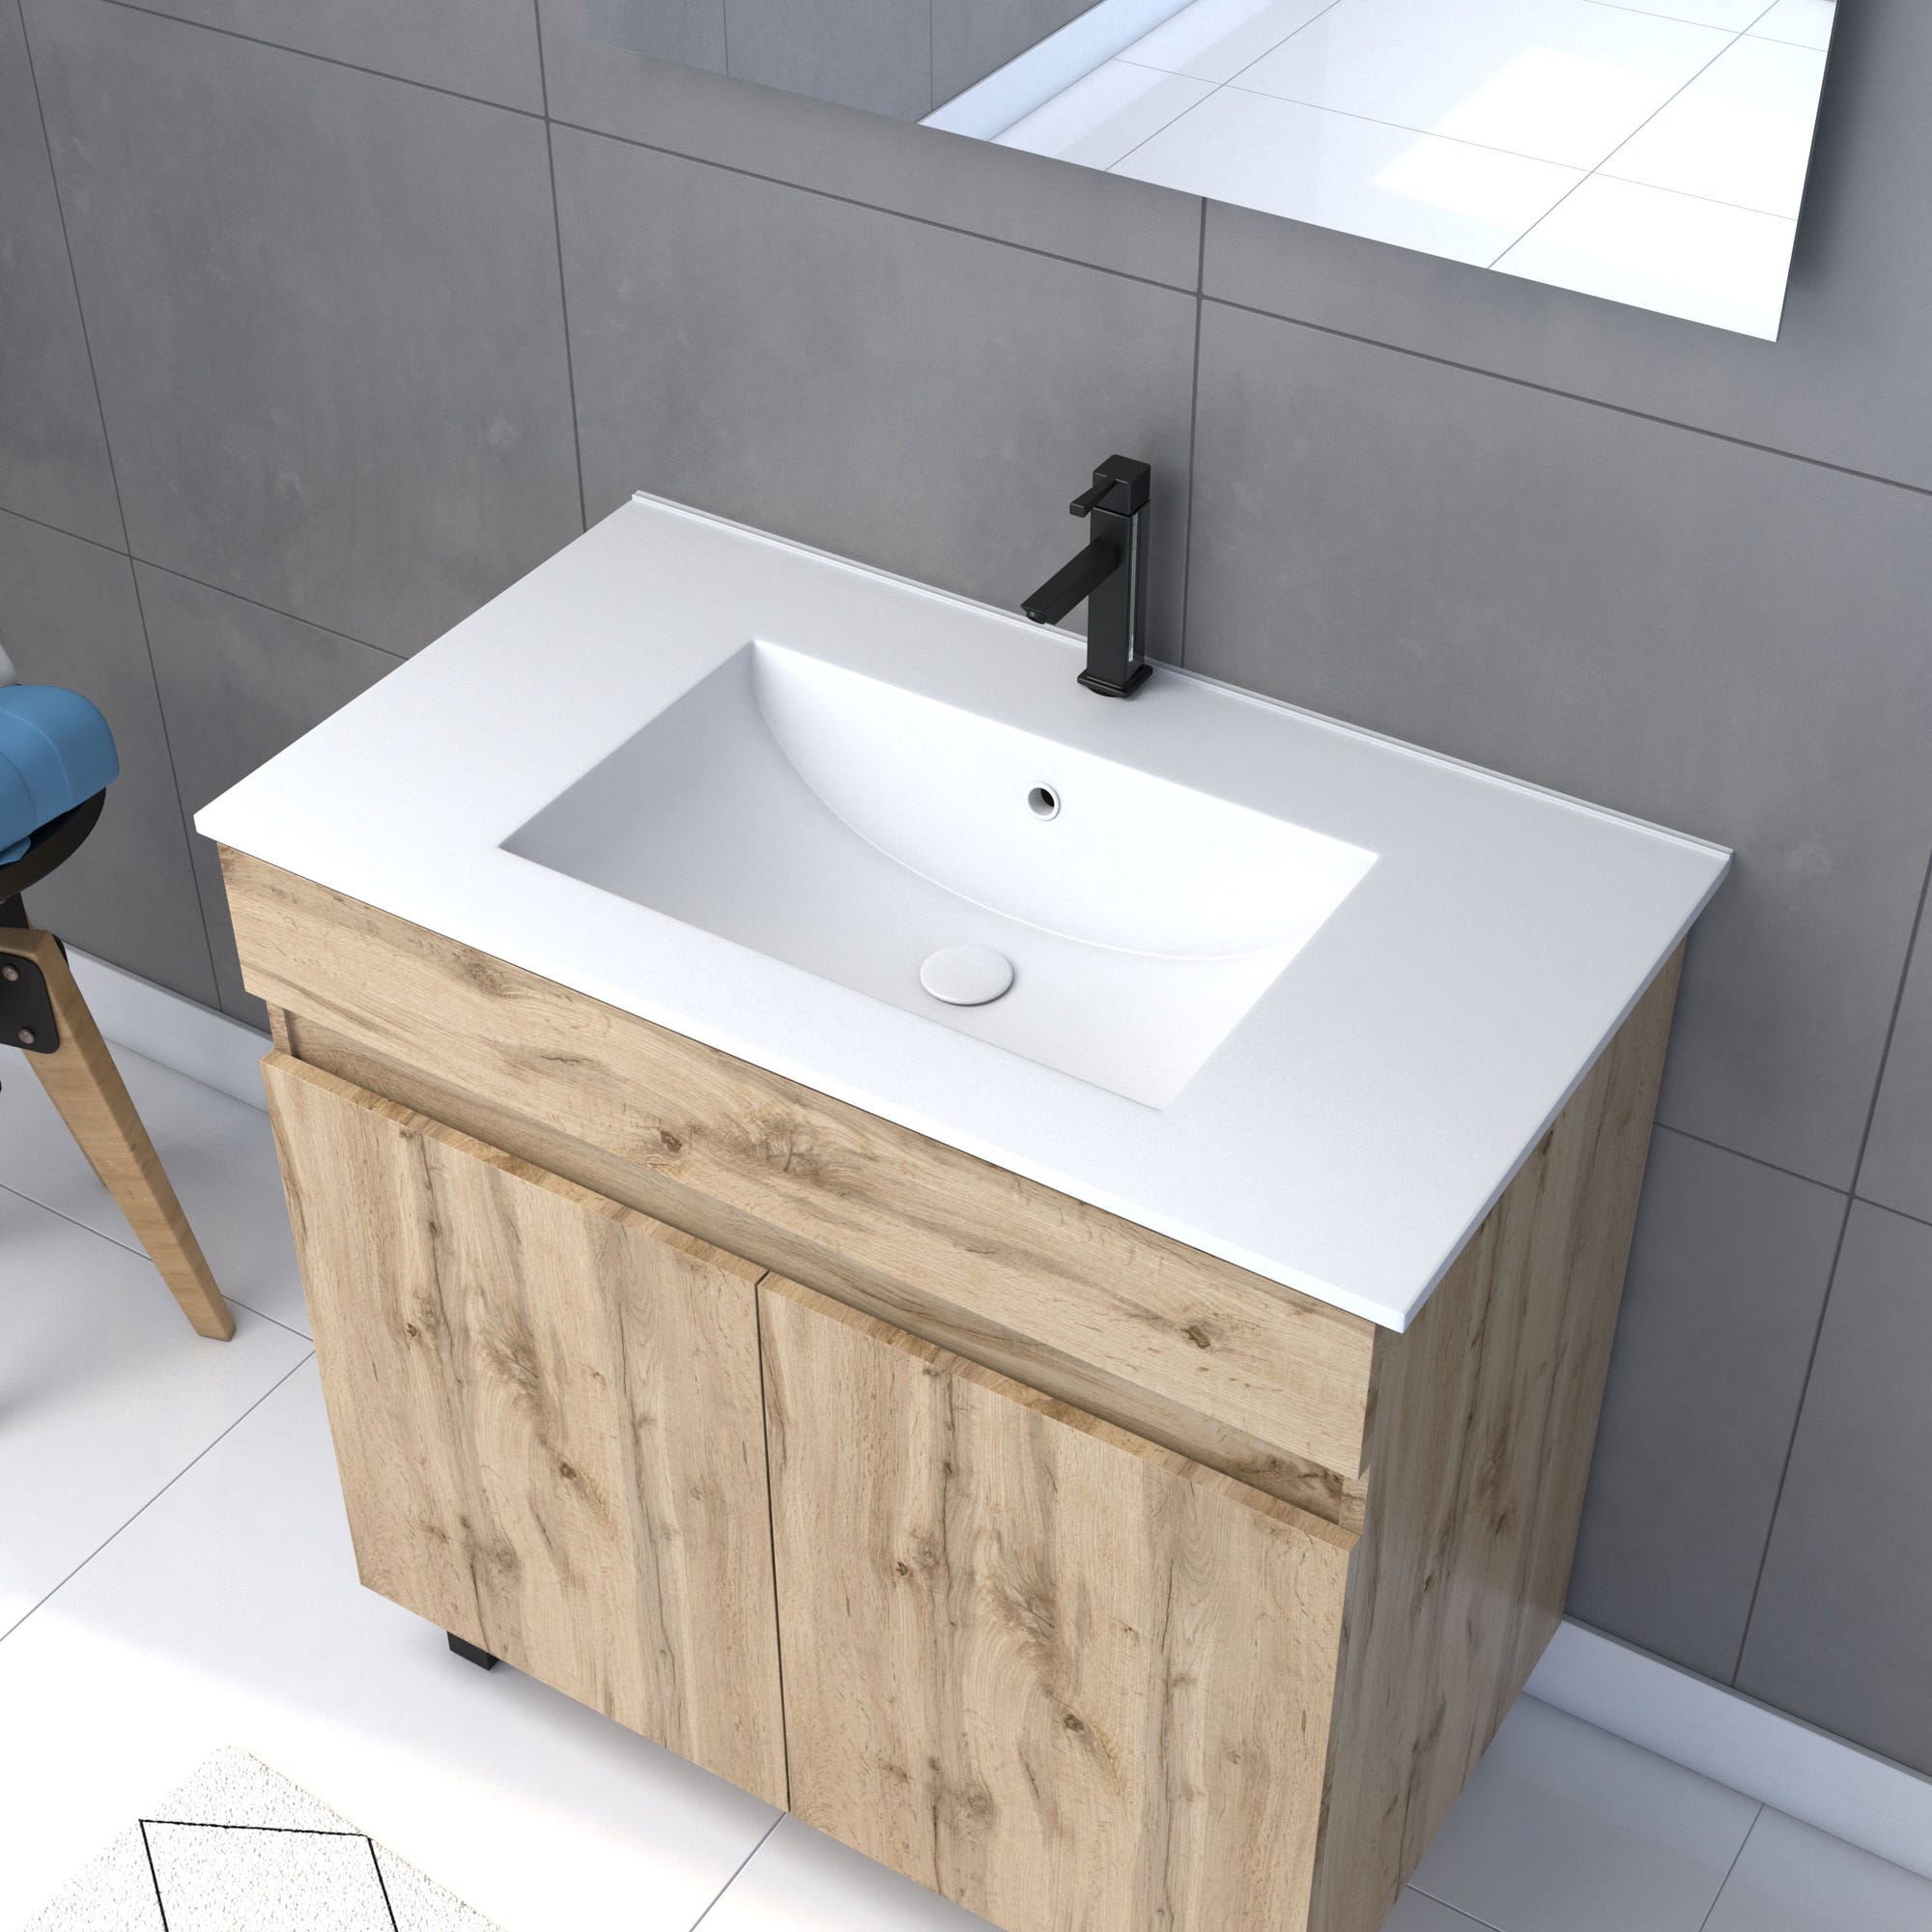 Meuble salle de bain 80x80 -Finition chene naturel + vasque blanche + miroir Led- TIMBER 80 - Pack26 1